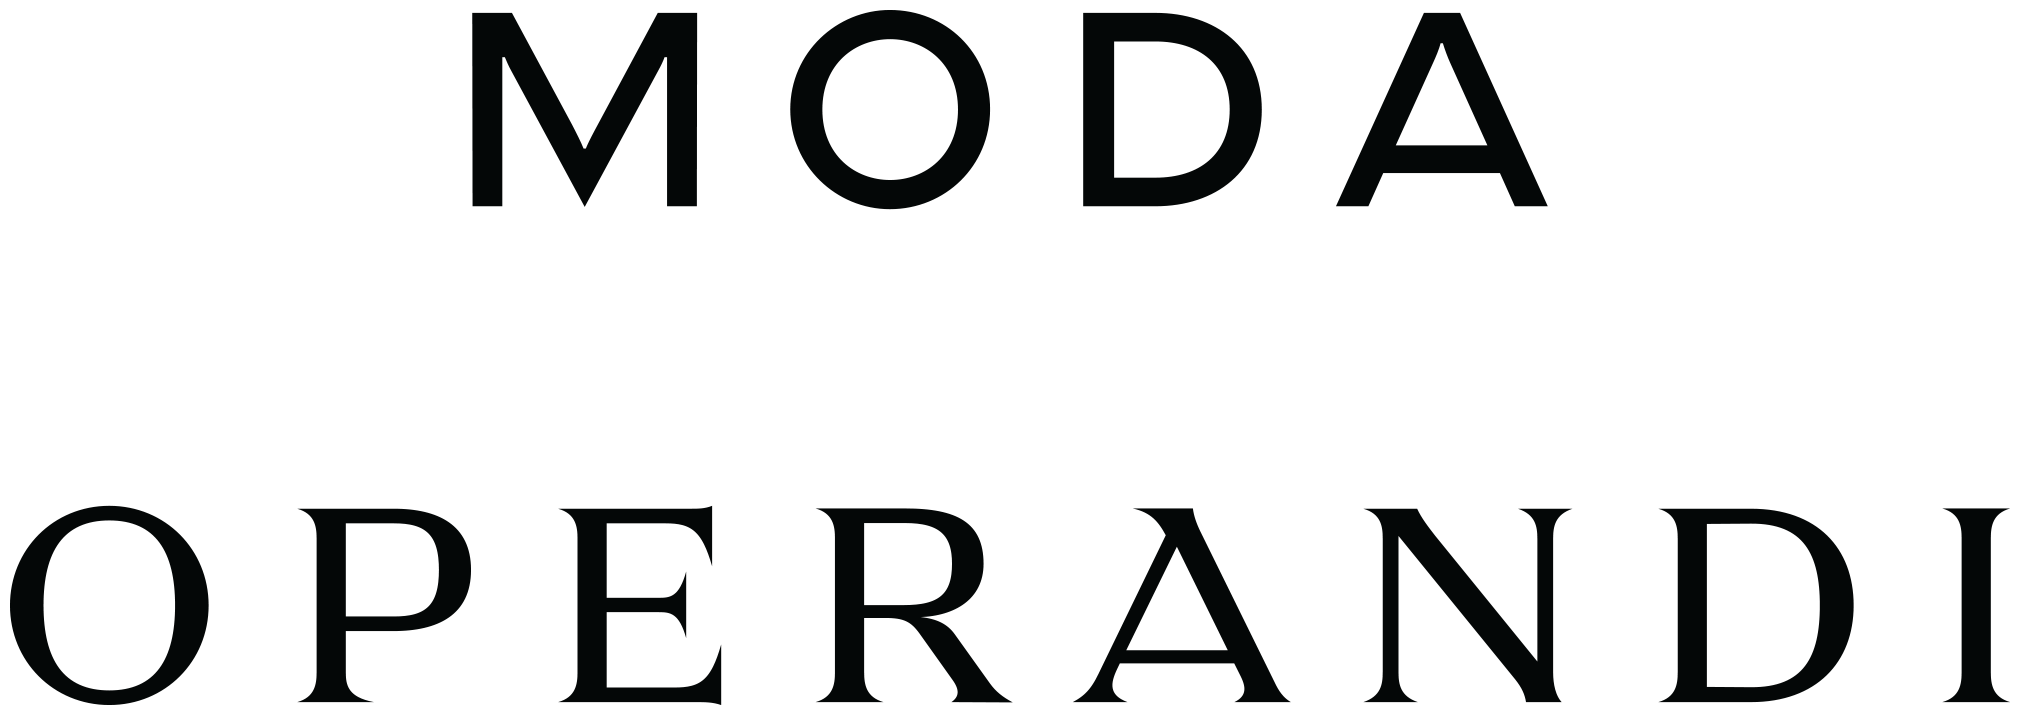 Brand New: New Logo and Identity for Moda Operandi by Lotta Nieminen